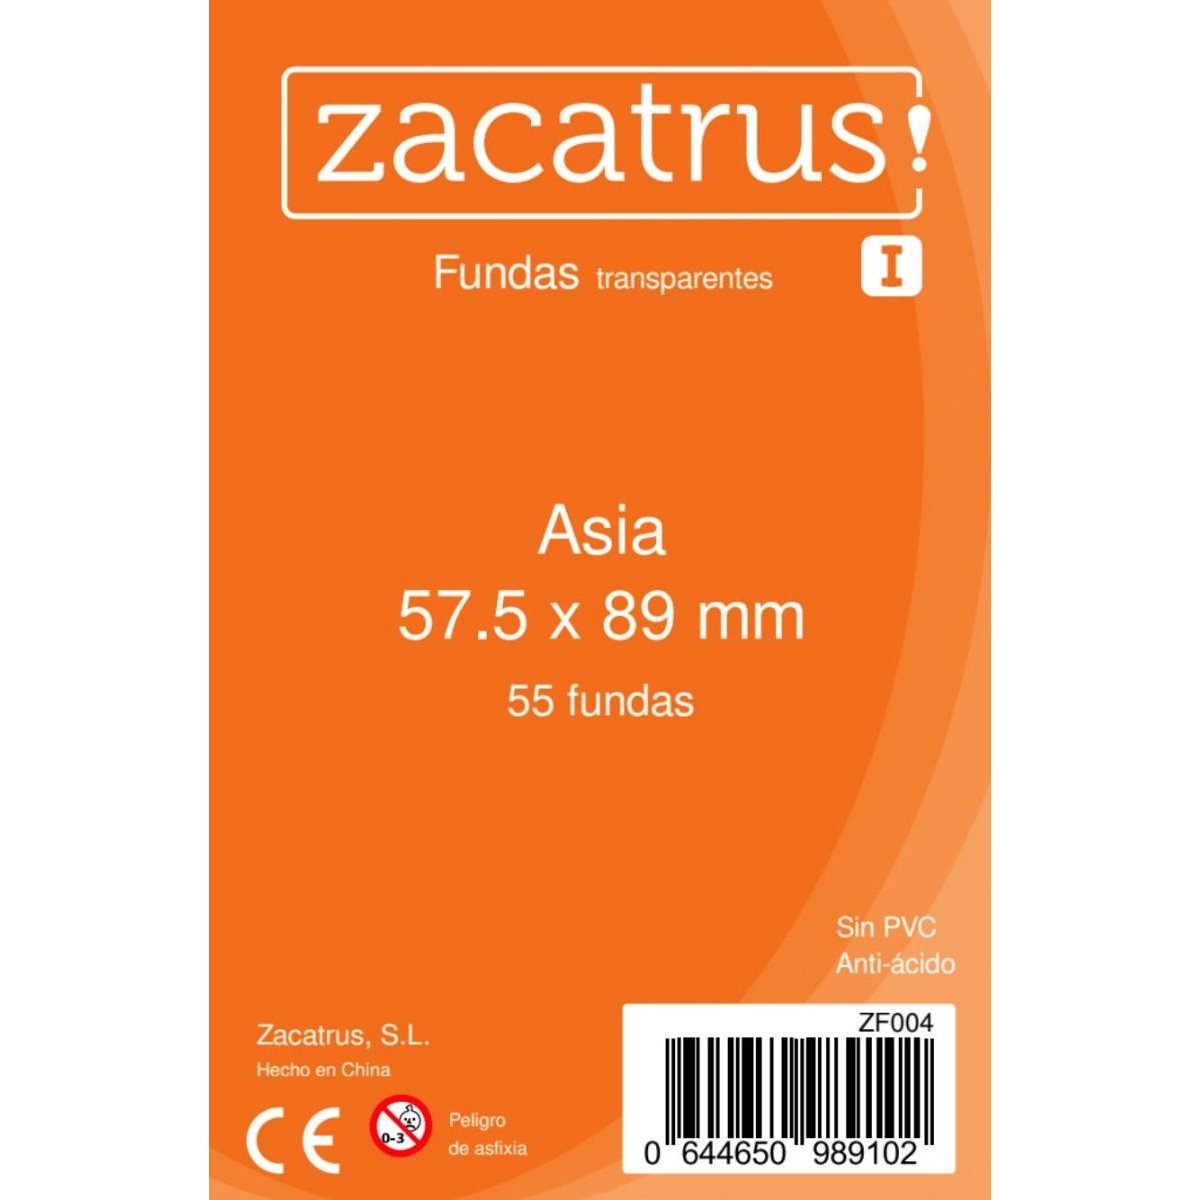 Acheter Protège-cartes : 63x88mm Zacatrus - Lot de 55 - Zacatrus